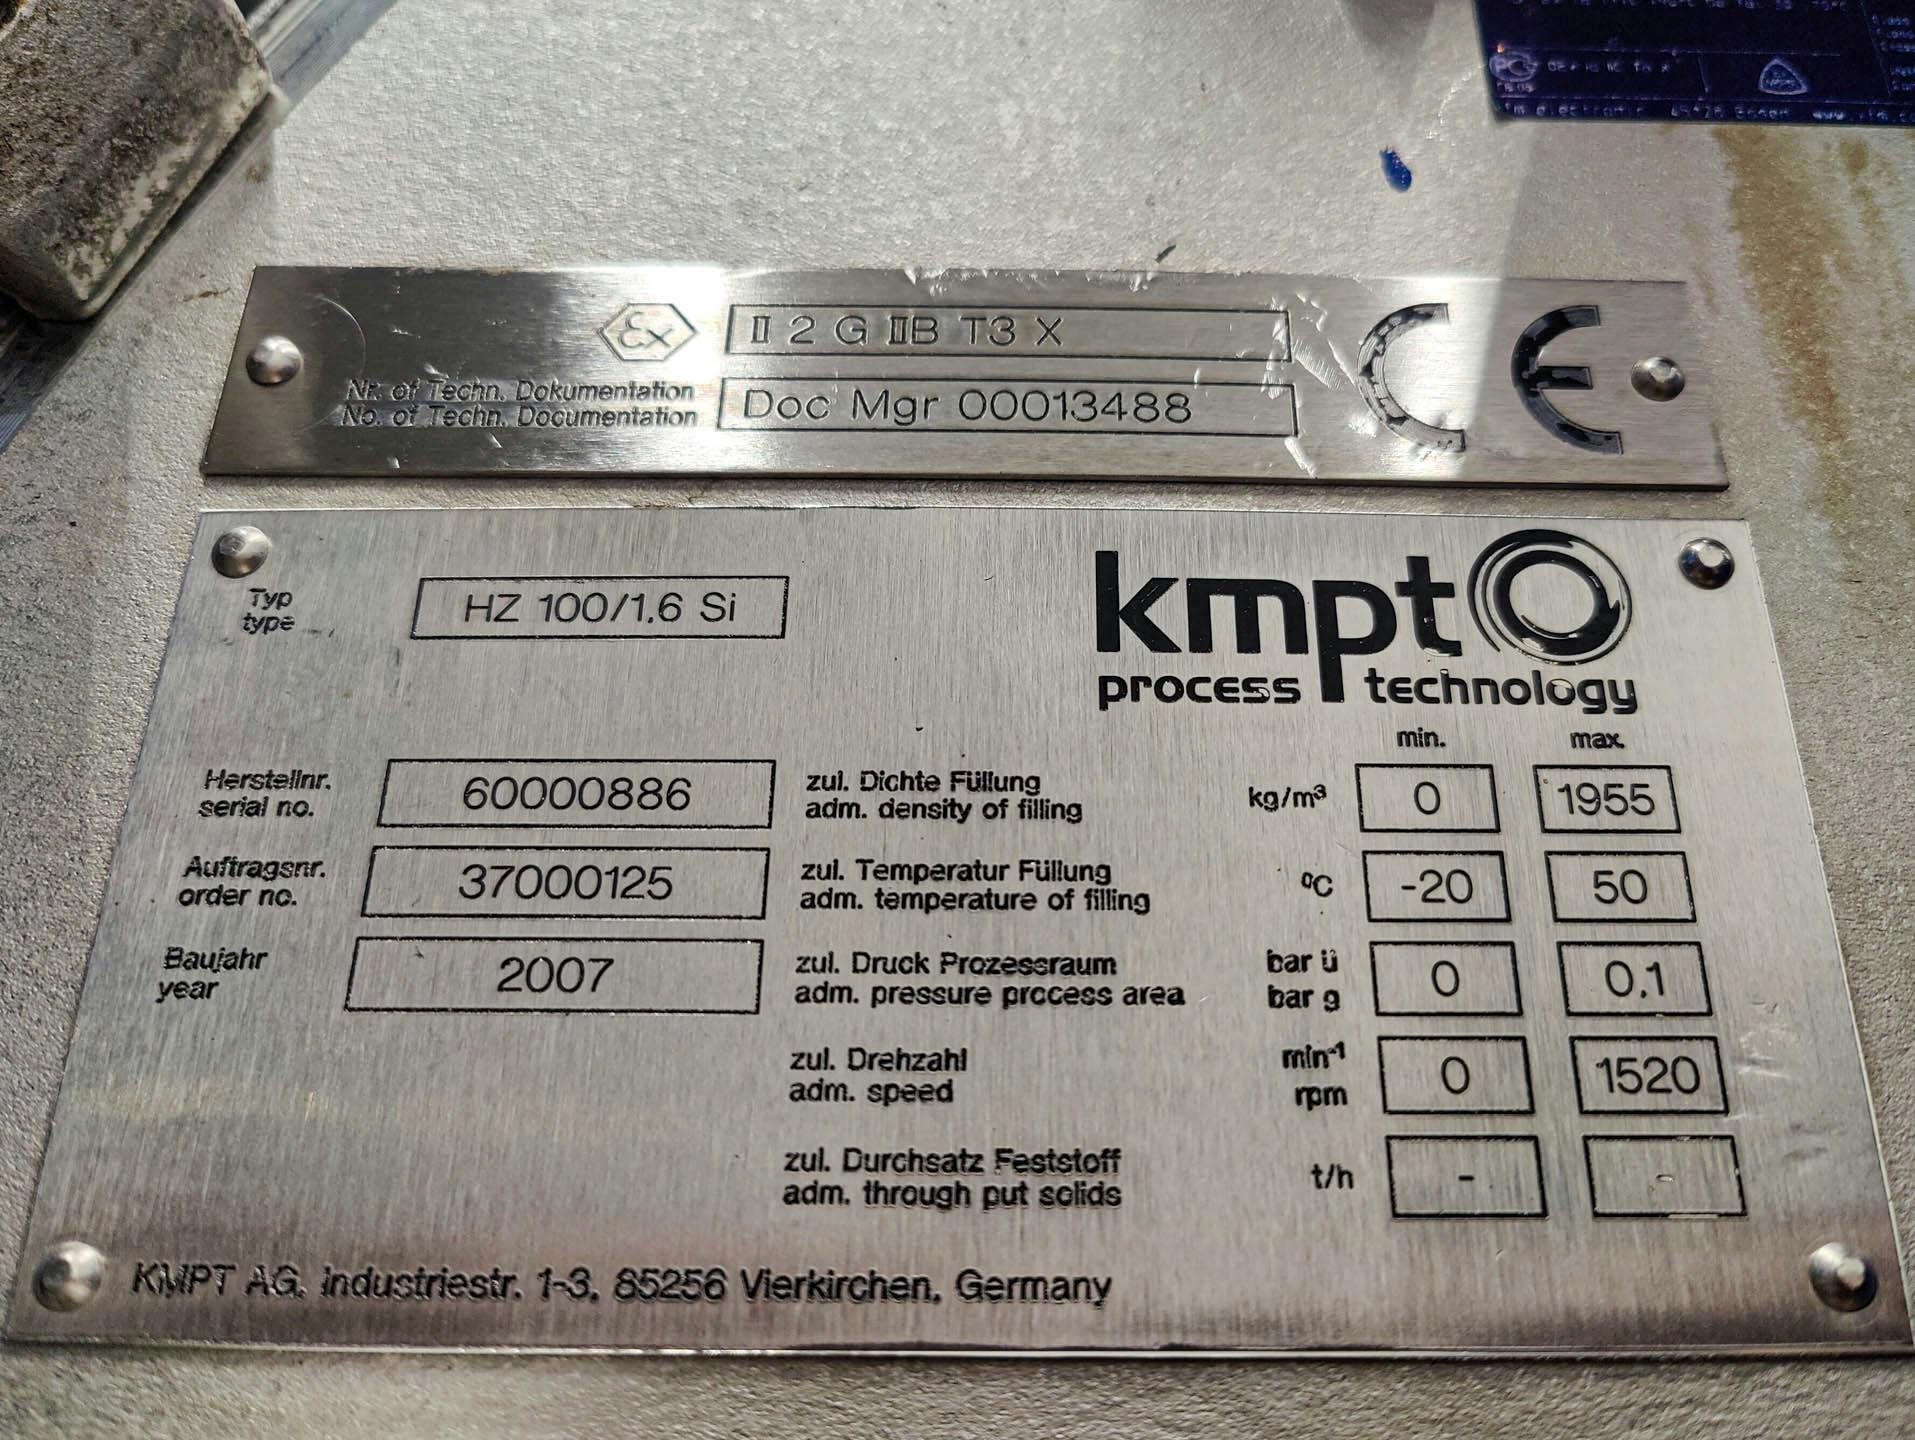 Andritz KMPT HZ-100/1.6 Si "syphon type centrifuge" - Schraapcentrifuge - image 9